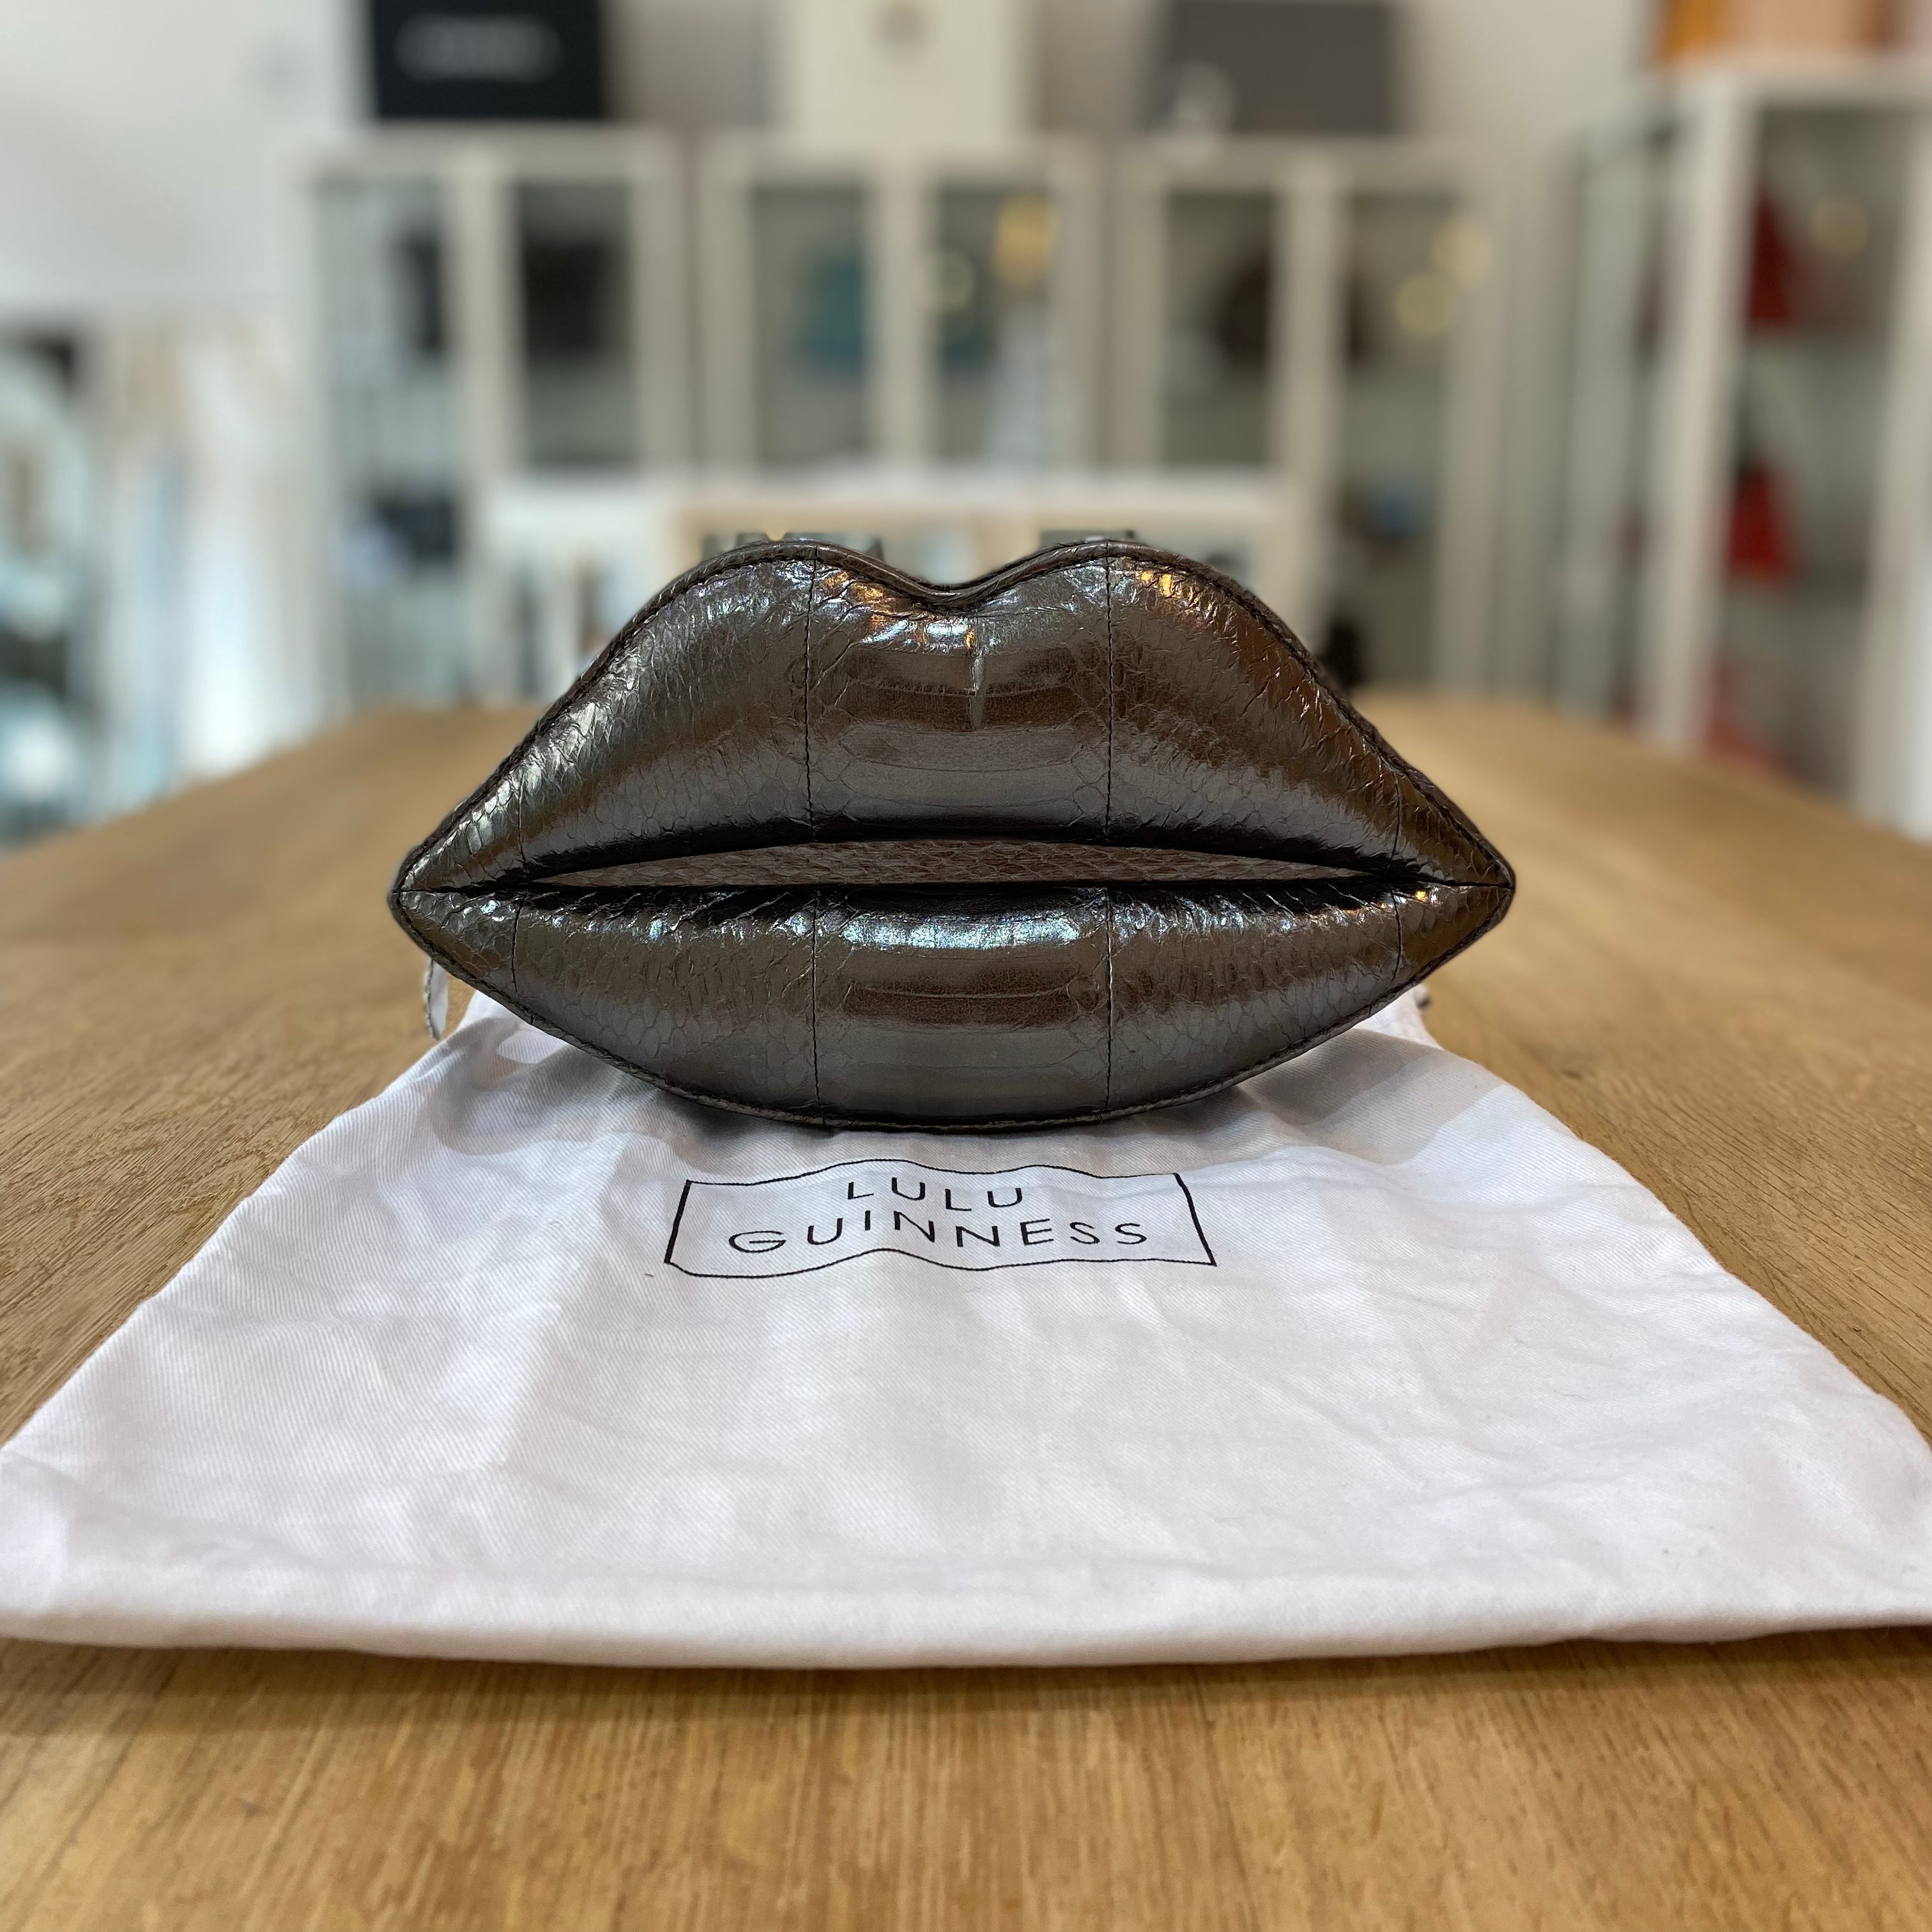 Lulu Guinness Lips Clutch Bag Review